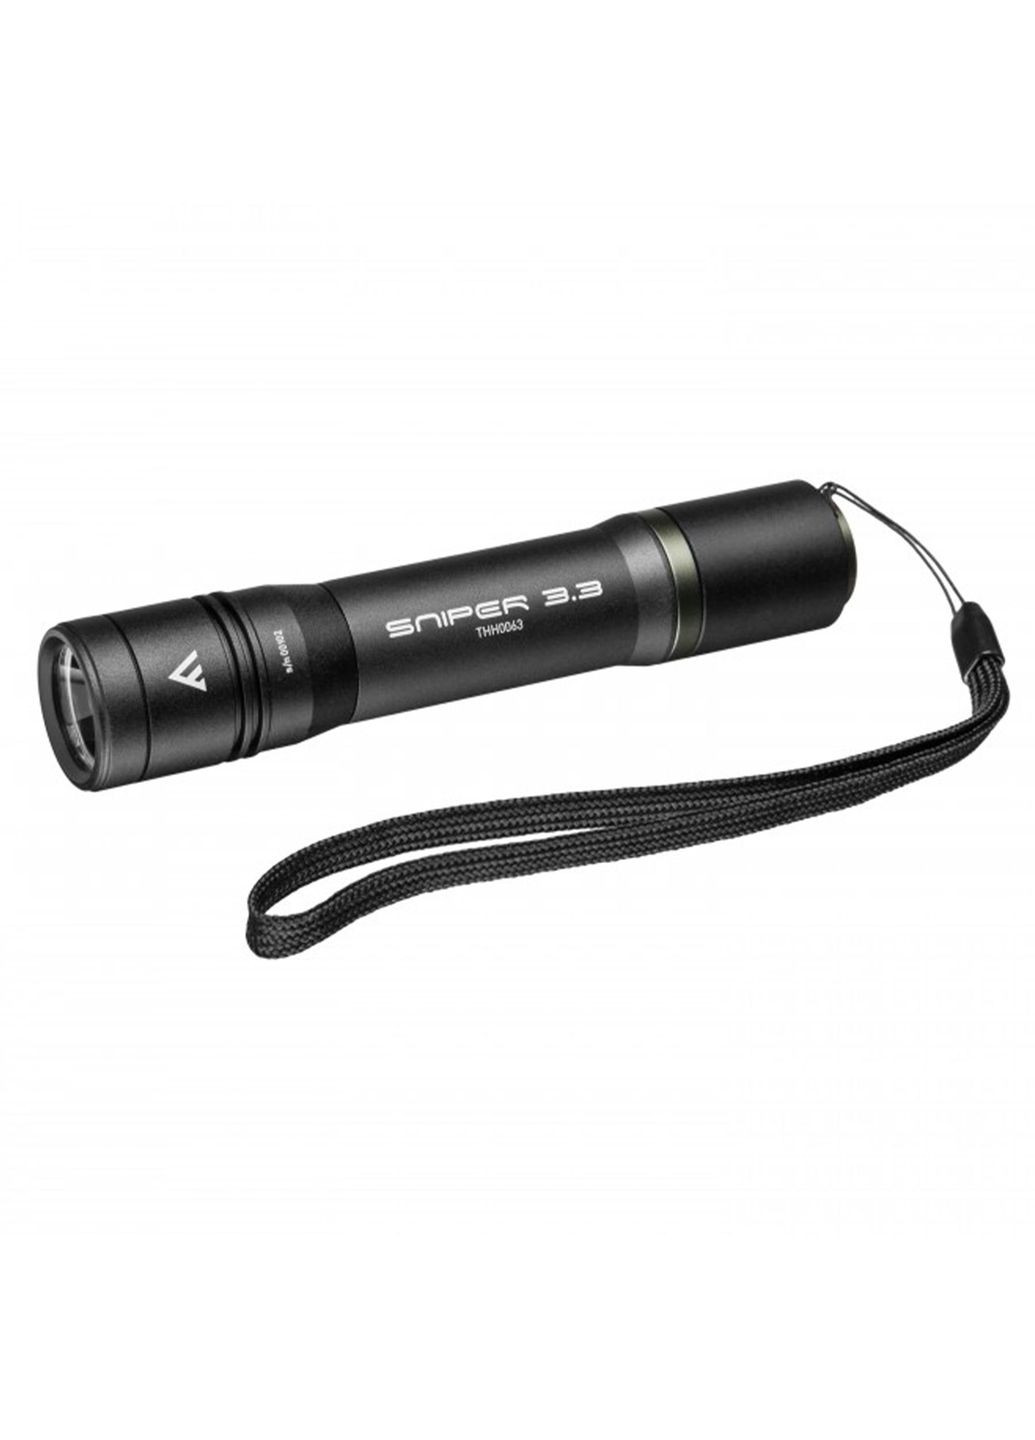 Ліхтар тактичний Sniper 3.3 (1000 Lm) Focus Powerbank USB Rechargeable Mactronic (278002928)